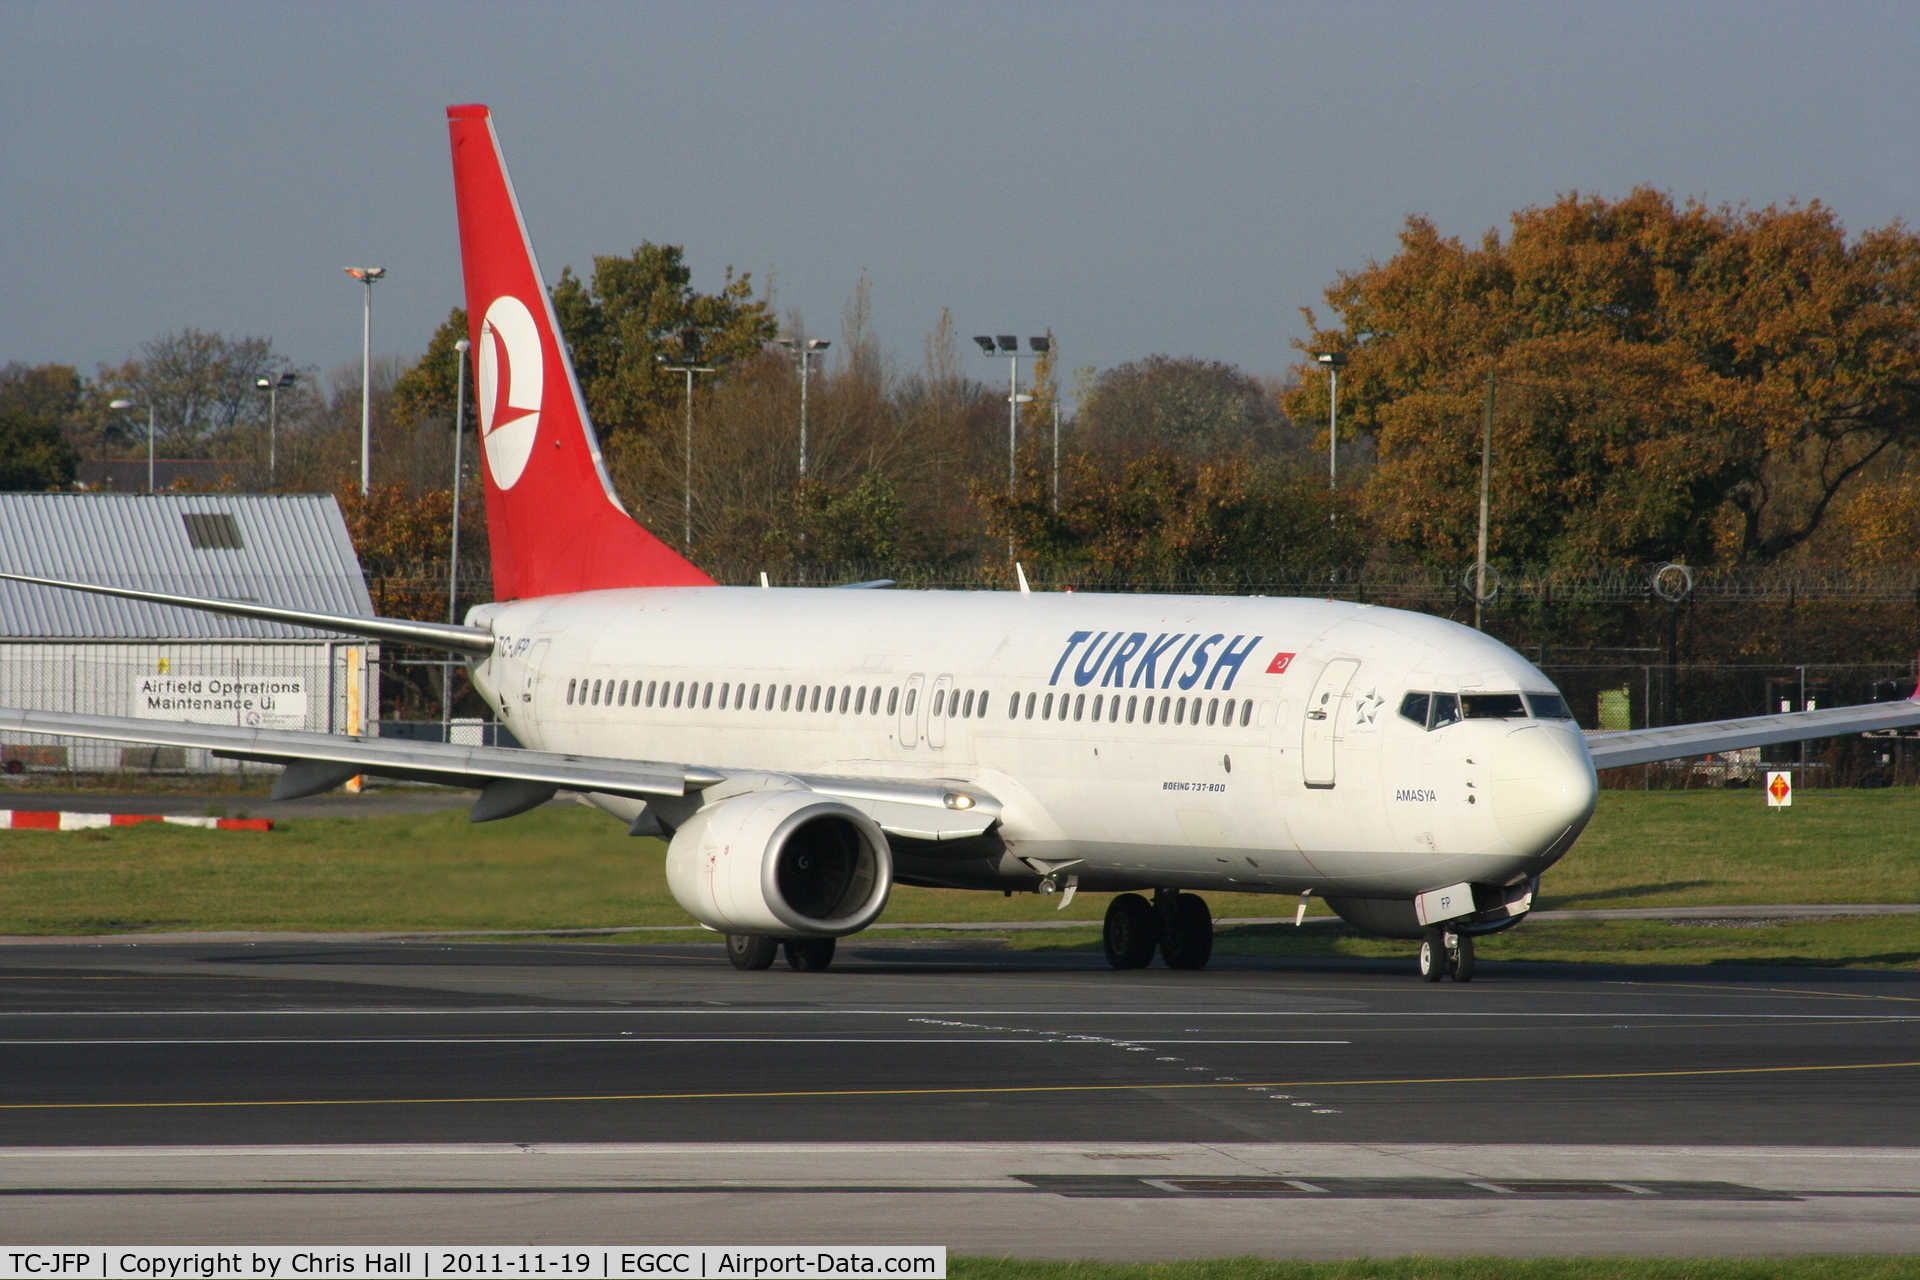 TC-JFP, 1999 Boeing 737-8F2 C/N 29778/349, Turkish Airlines